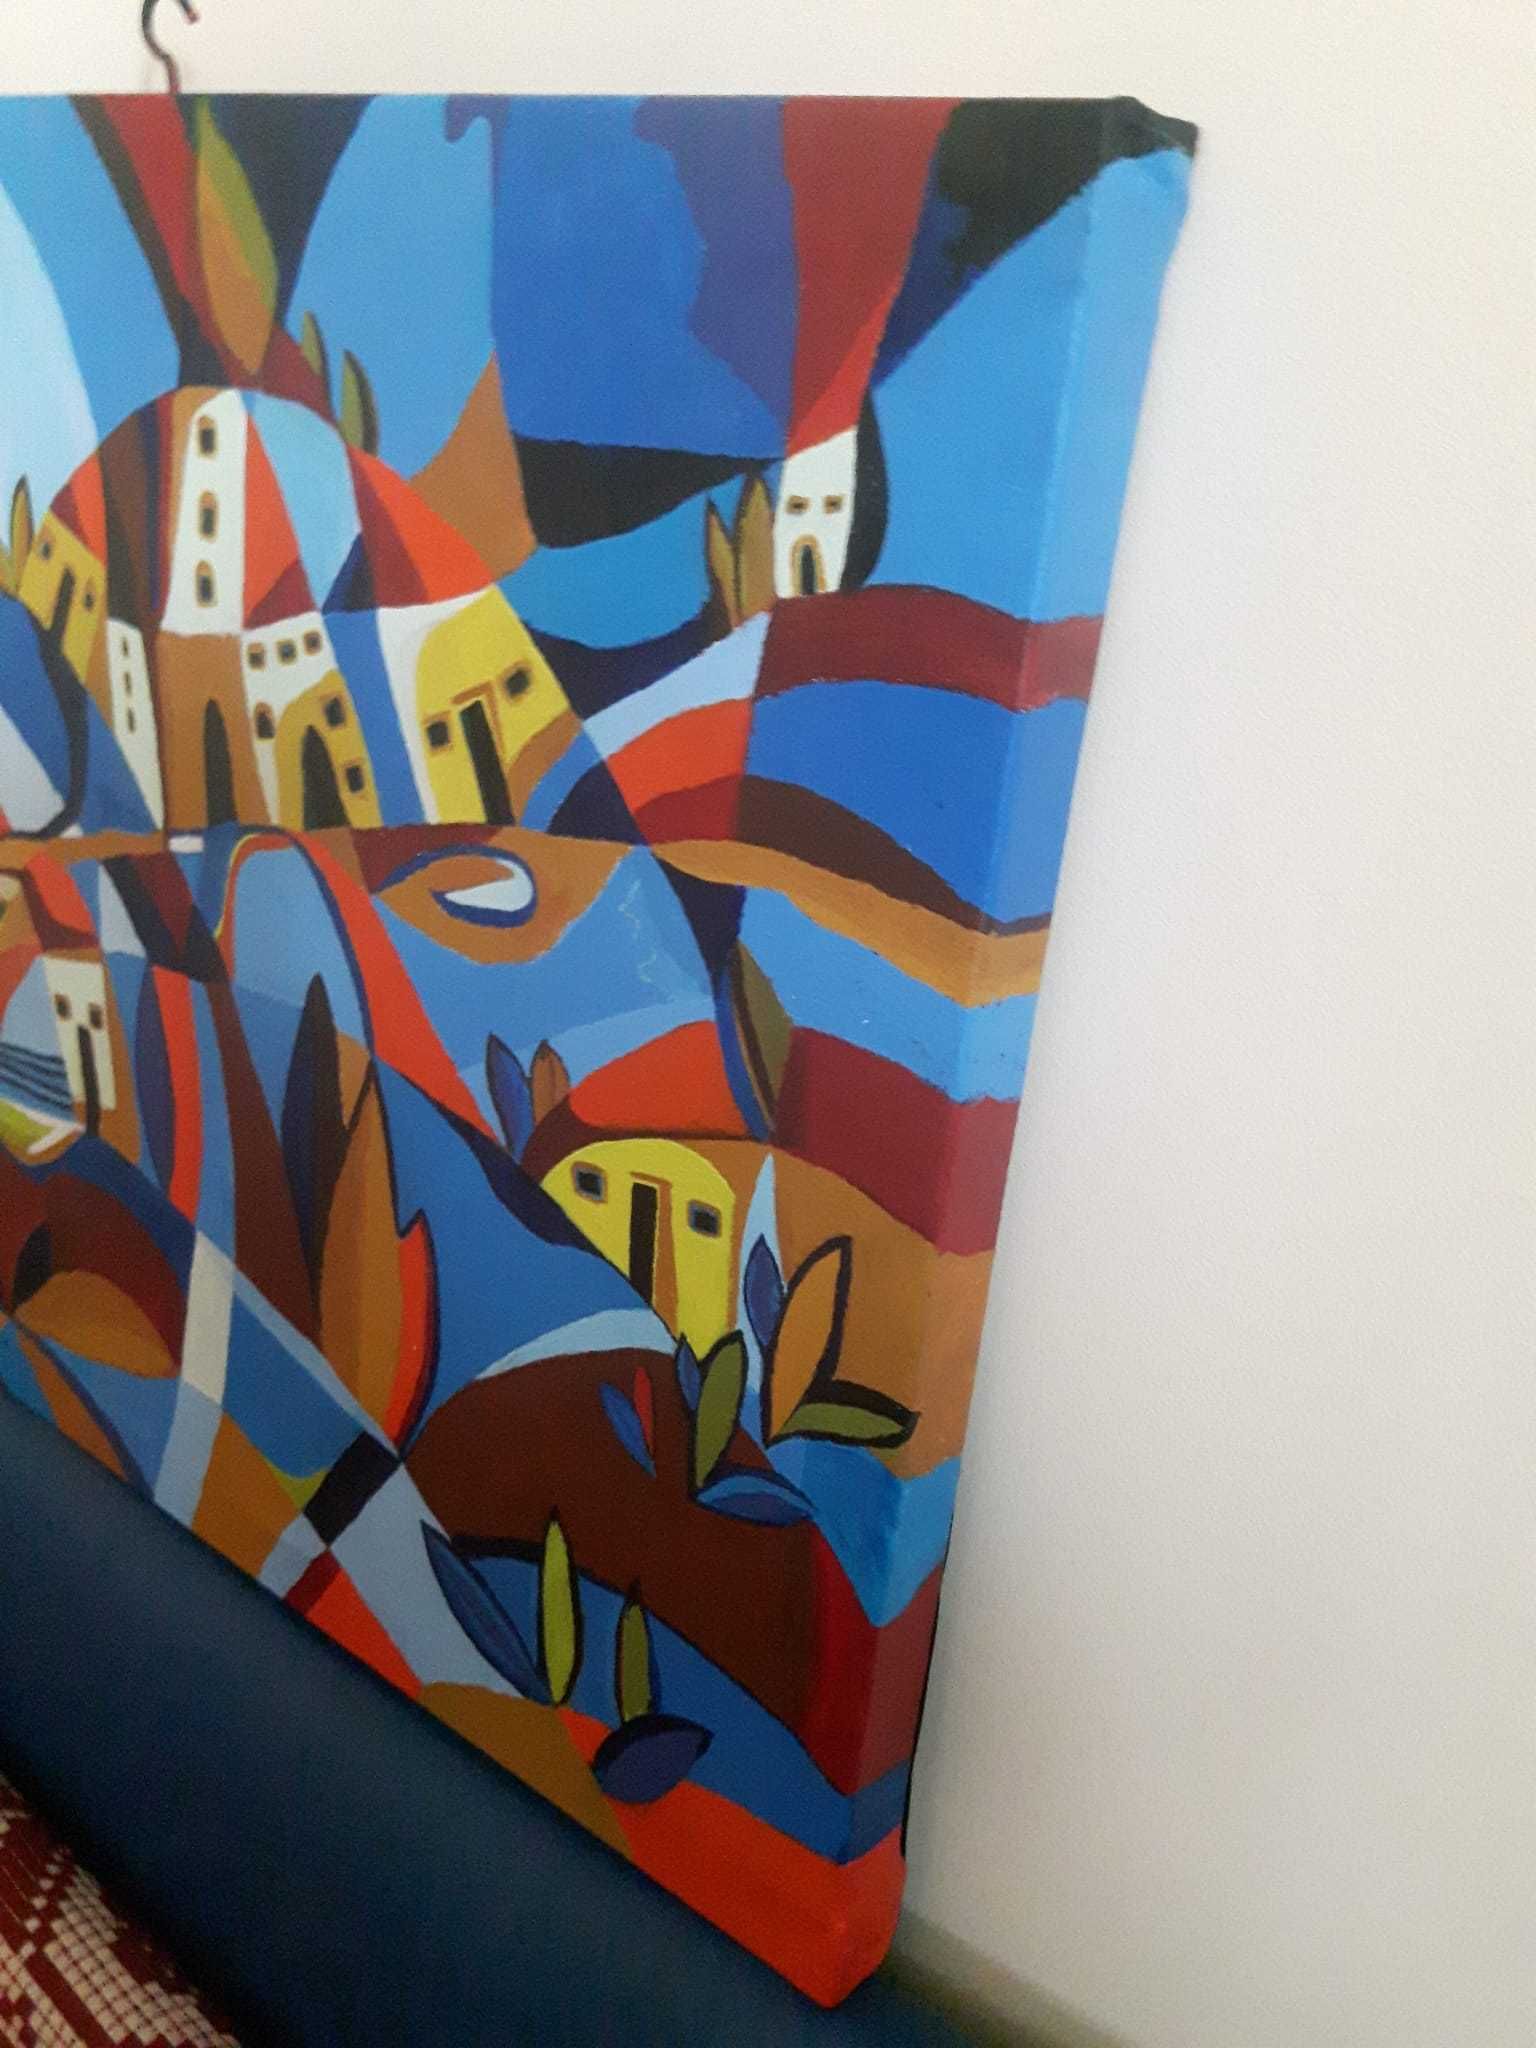 Pictura culori acrilice pe panza 60x47 cm–Peisaj abstract al unui sat